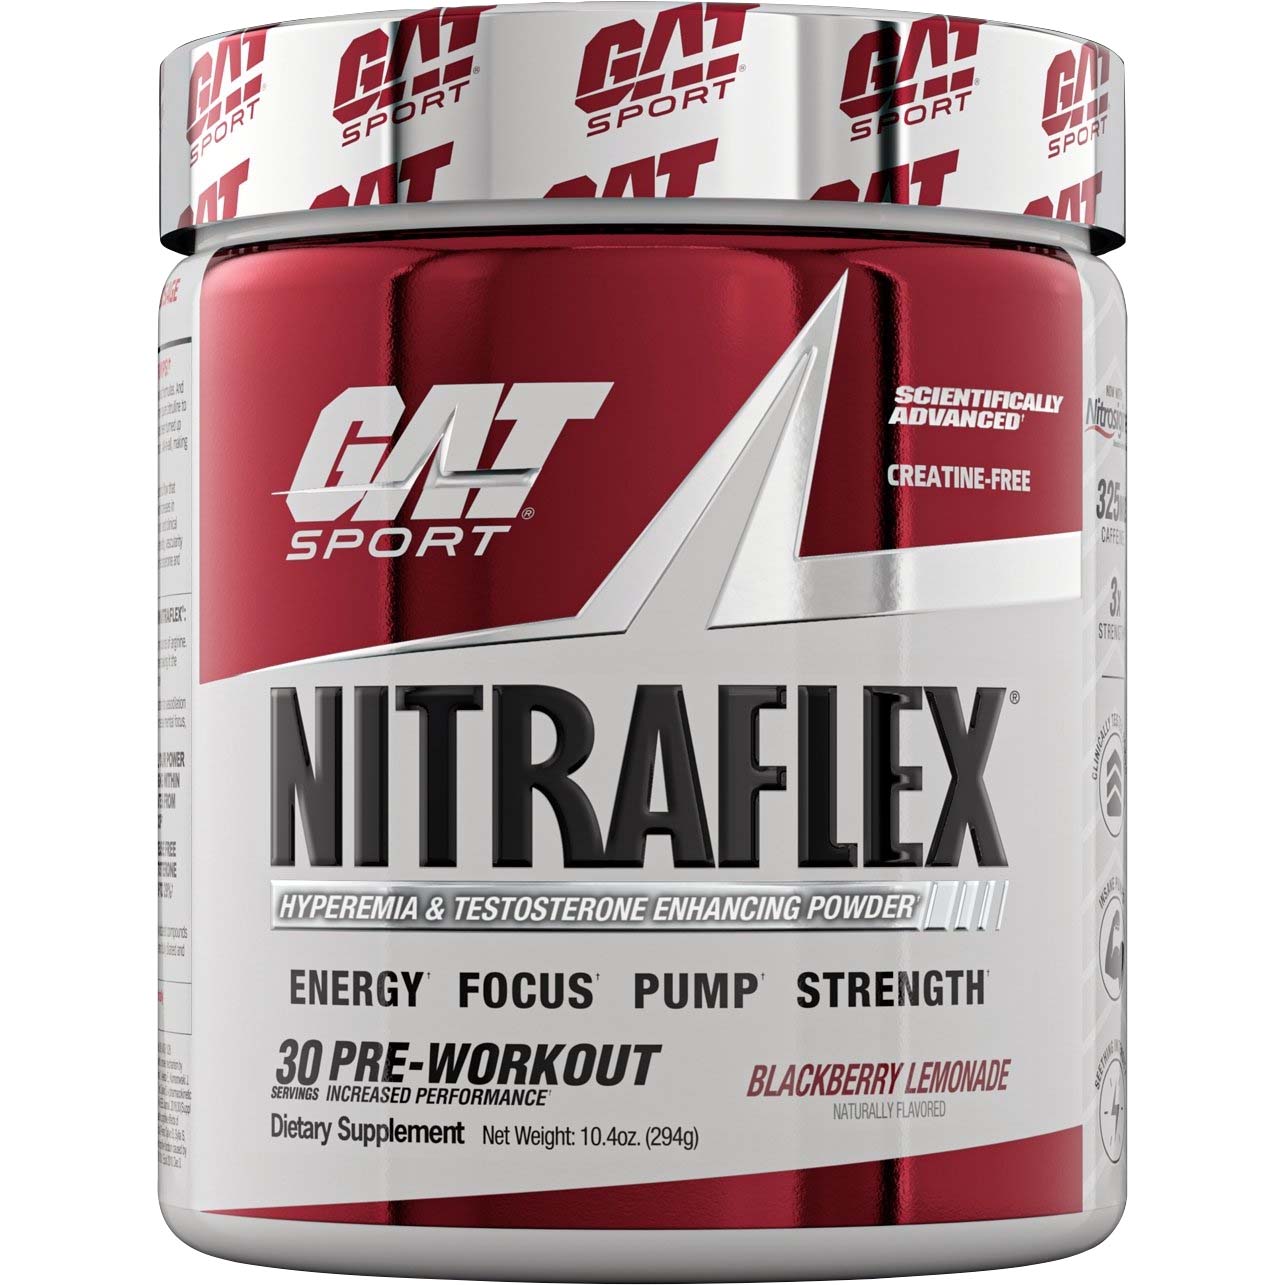 Gat Sport Nitraflex Testosterone Boosting Powder 30 Black Cherry